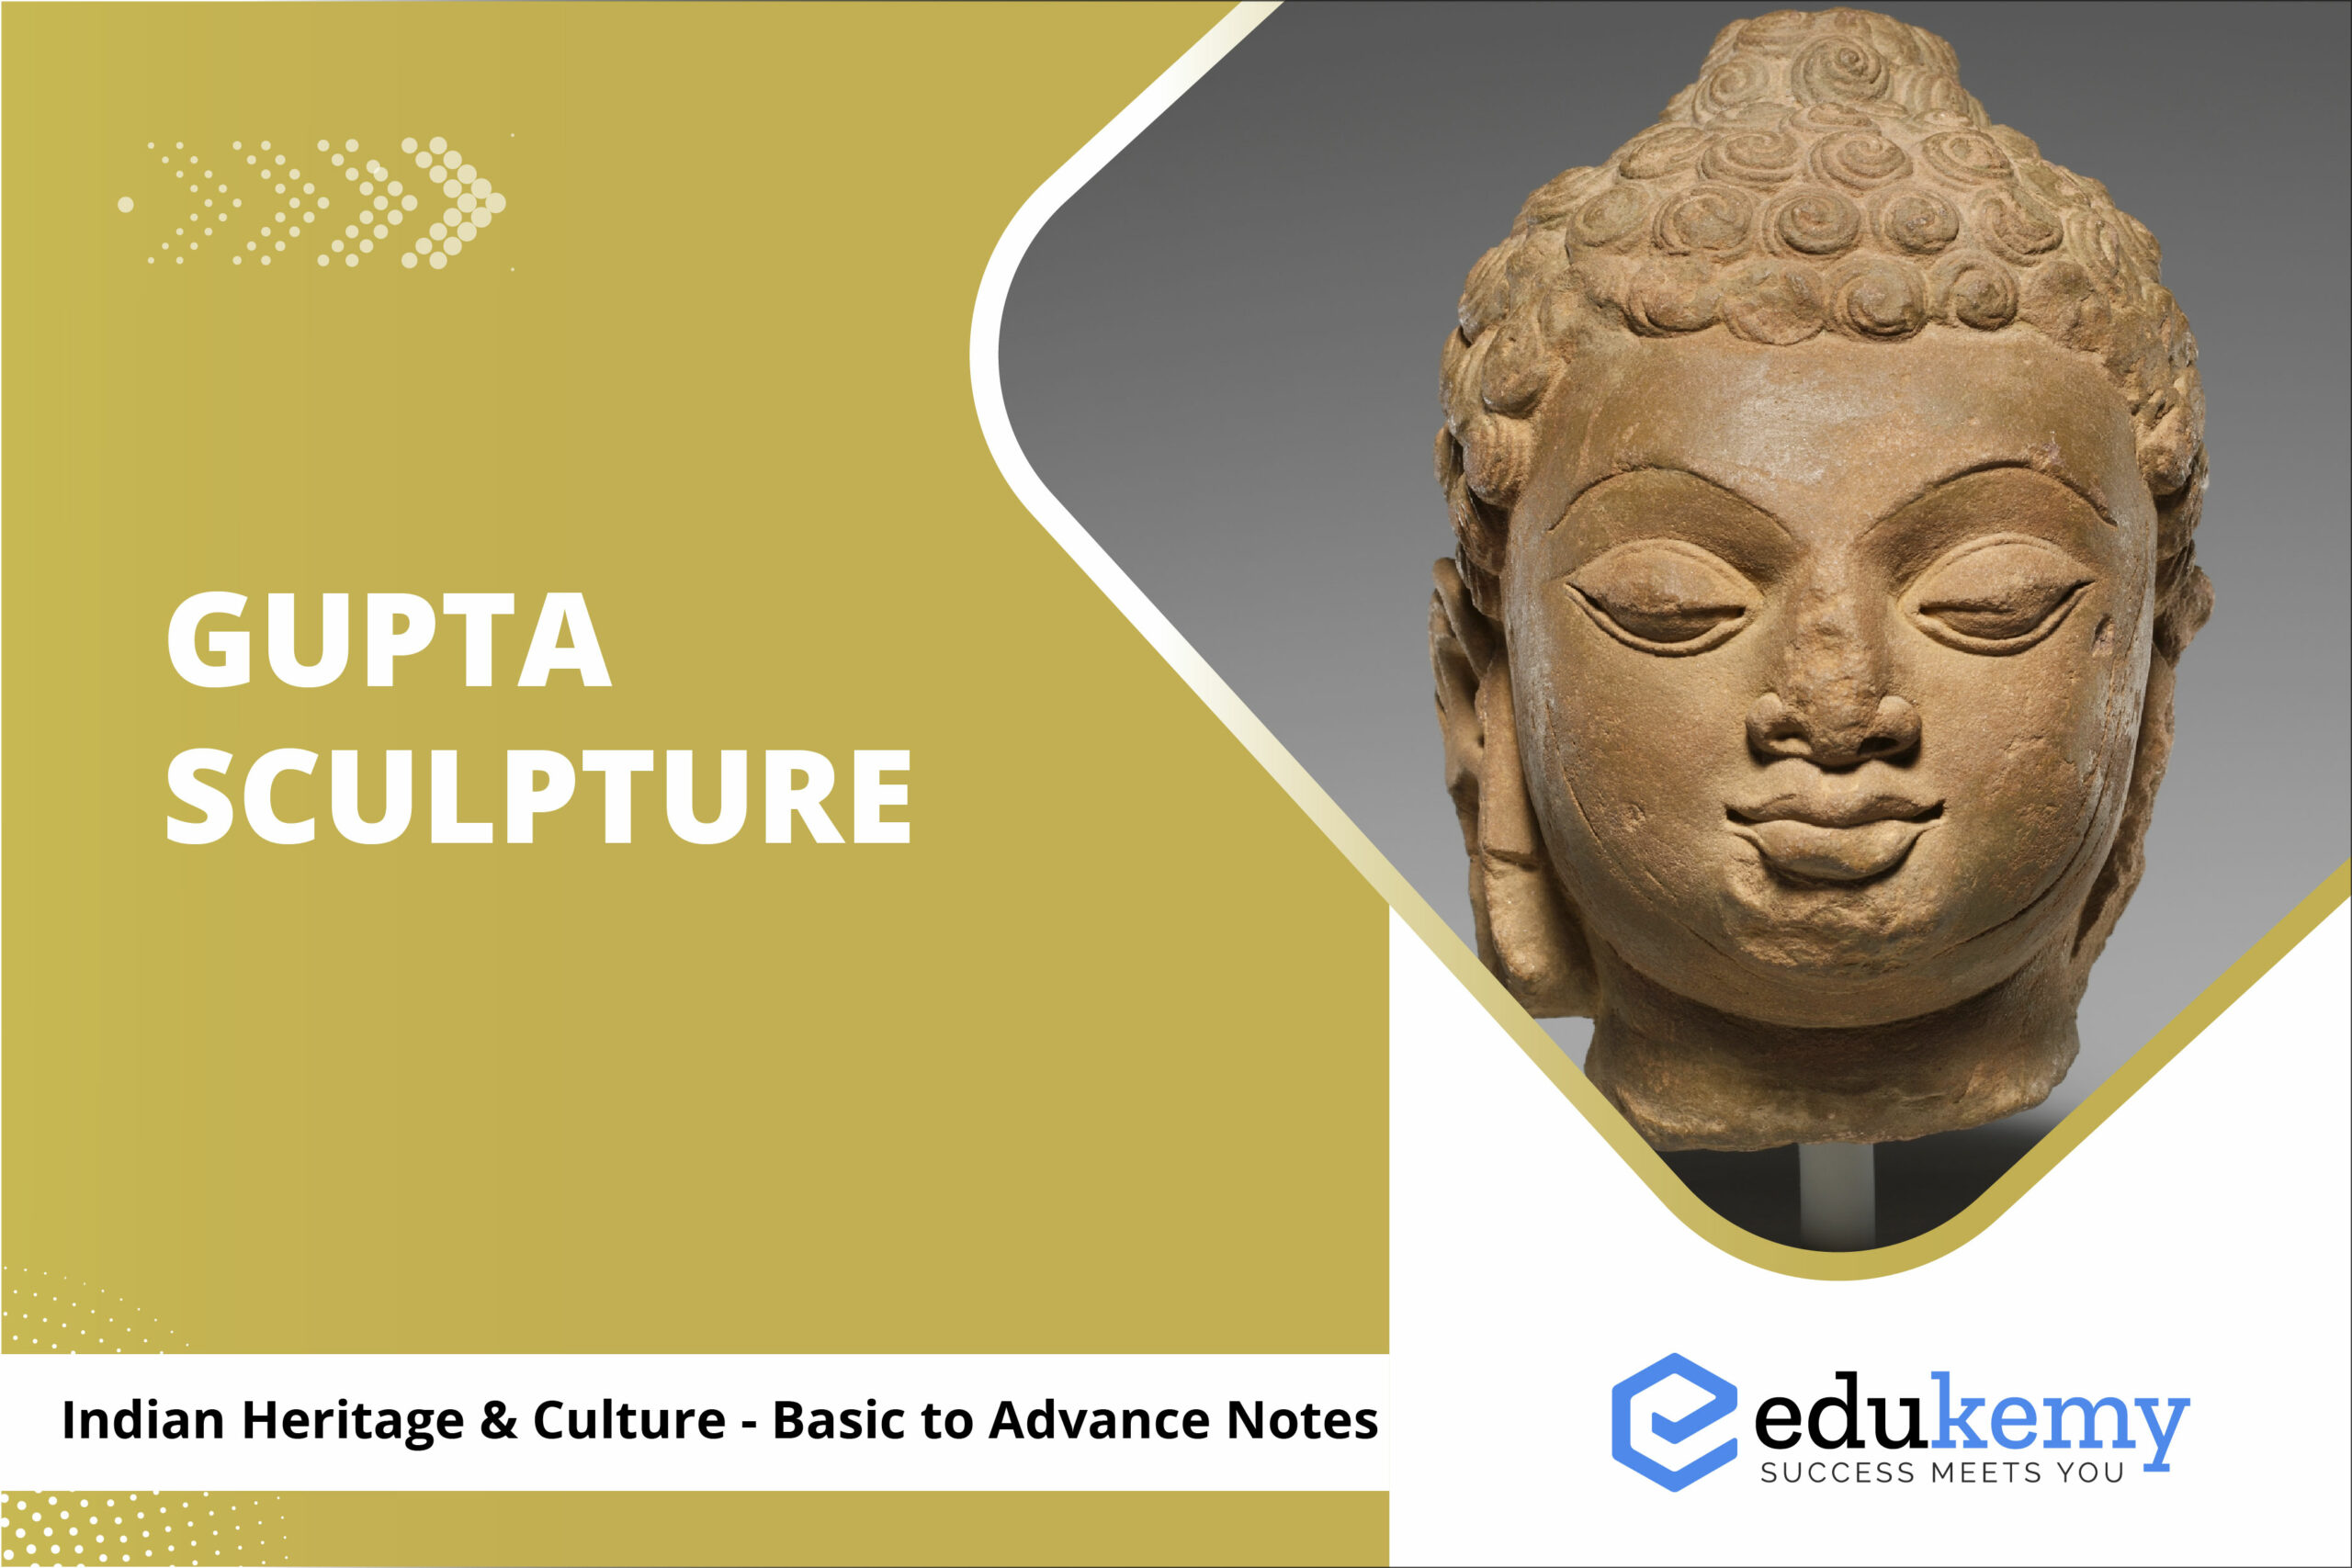 Gupta Sculpture